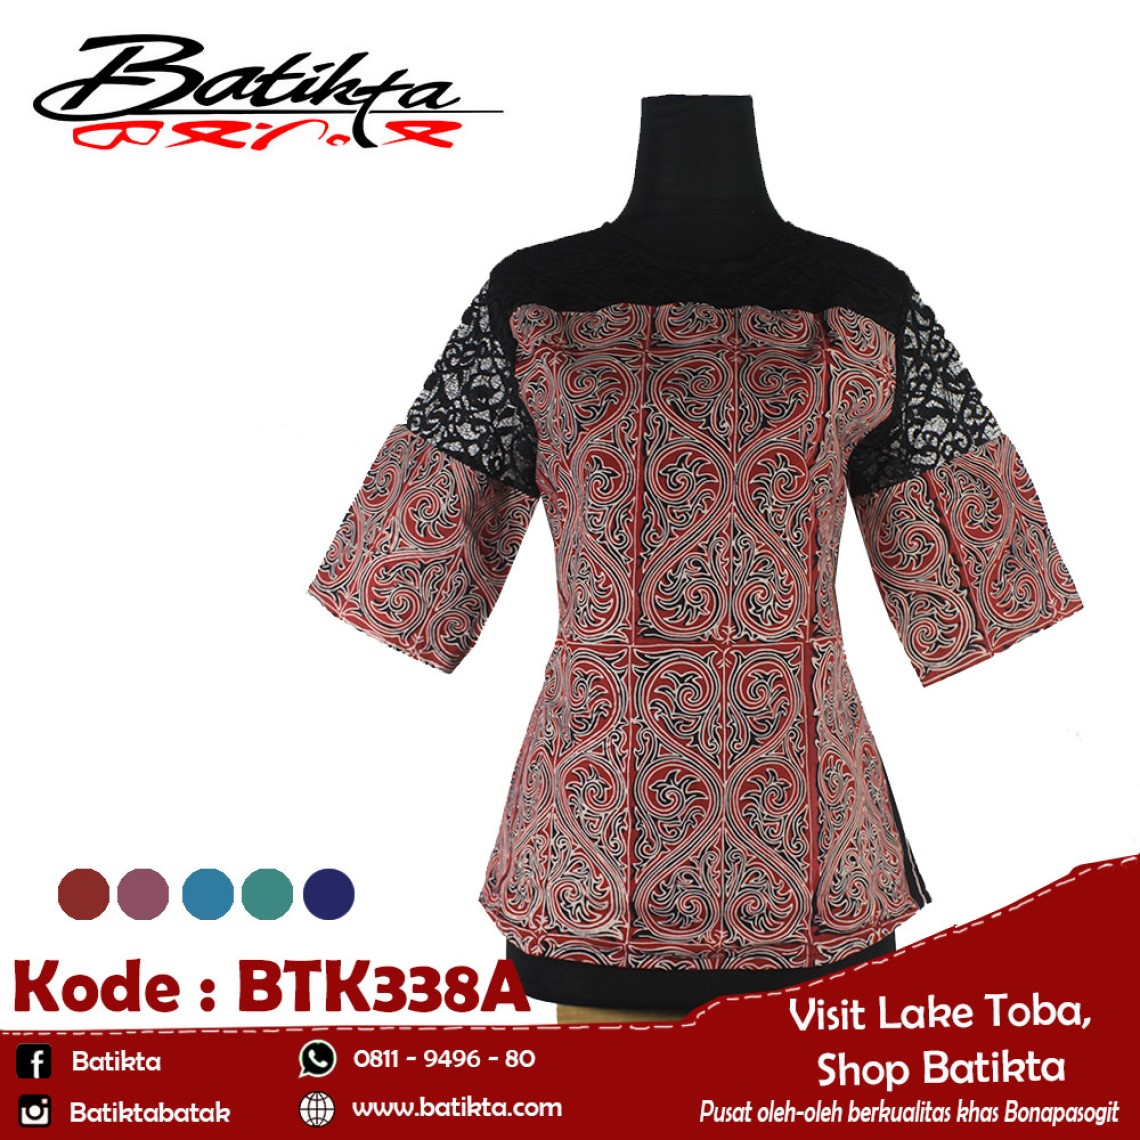 BTK338A Blus Batik Motif Gorga Warna Merah Putih Hitam profile picture